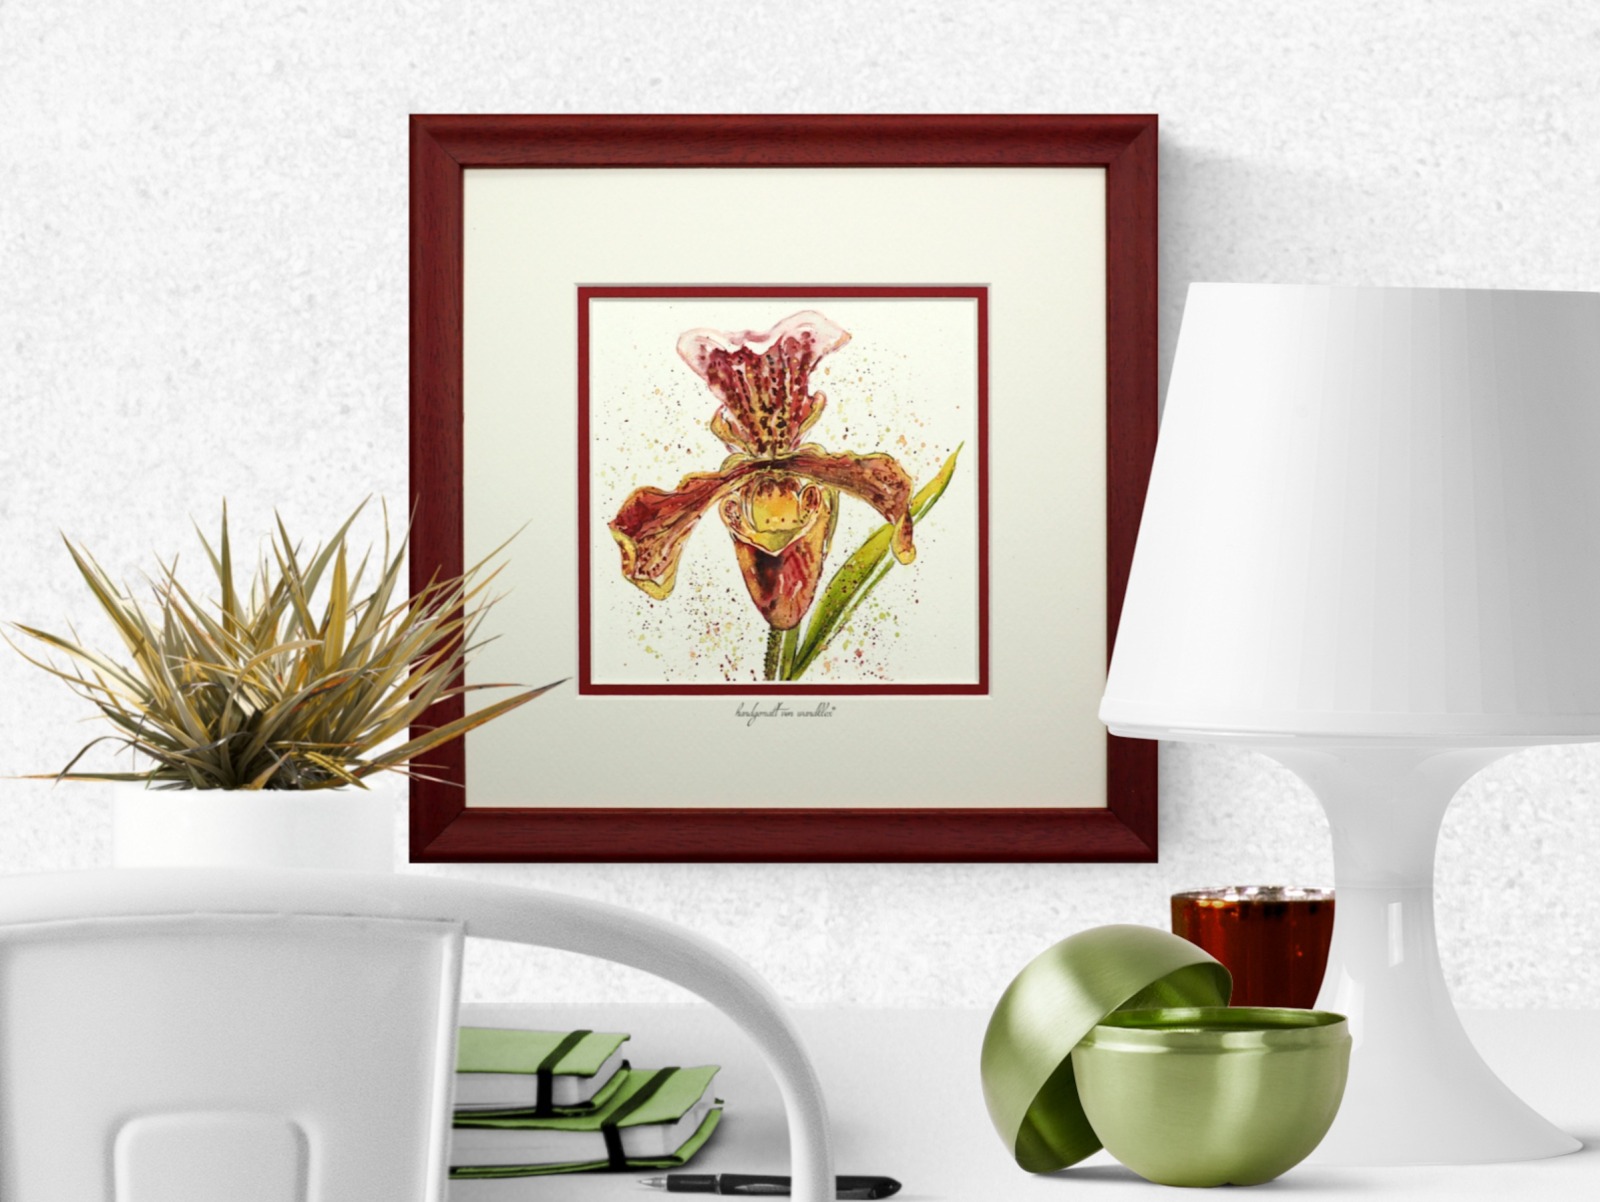 Frauenschuh Orchidee Illustration Aquarell edel gerahmtes handgemaltes Original, Blumenbild, Einzels